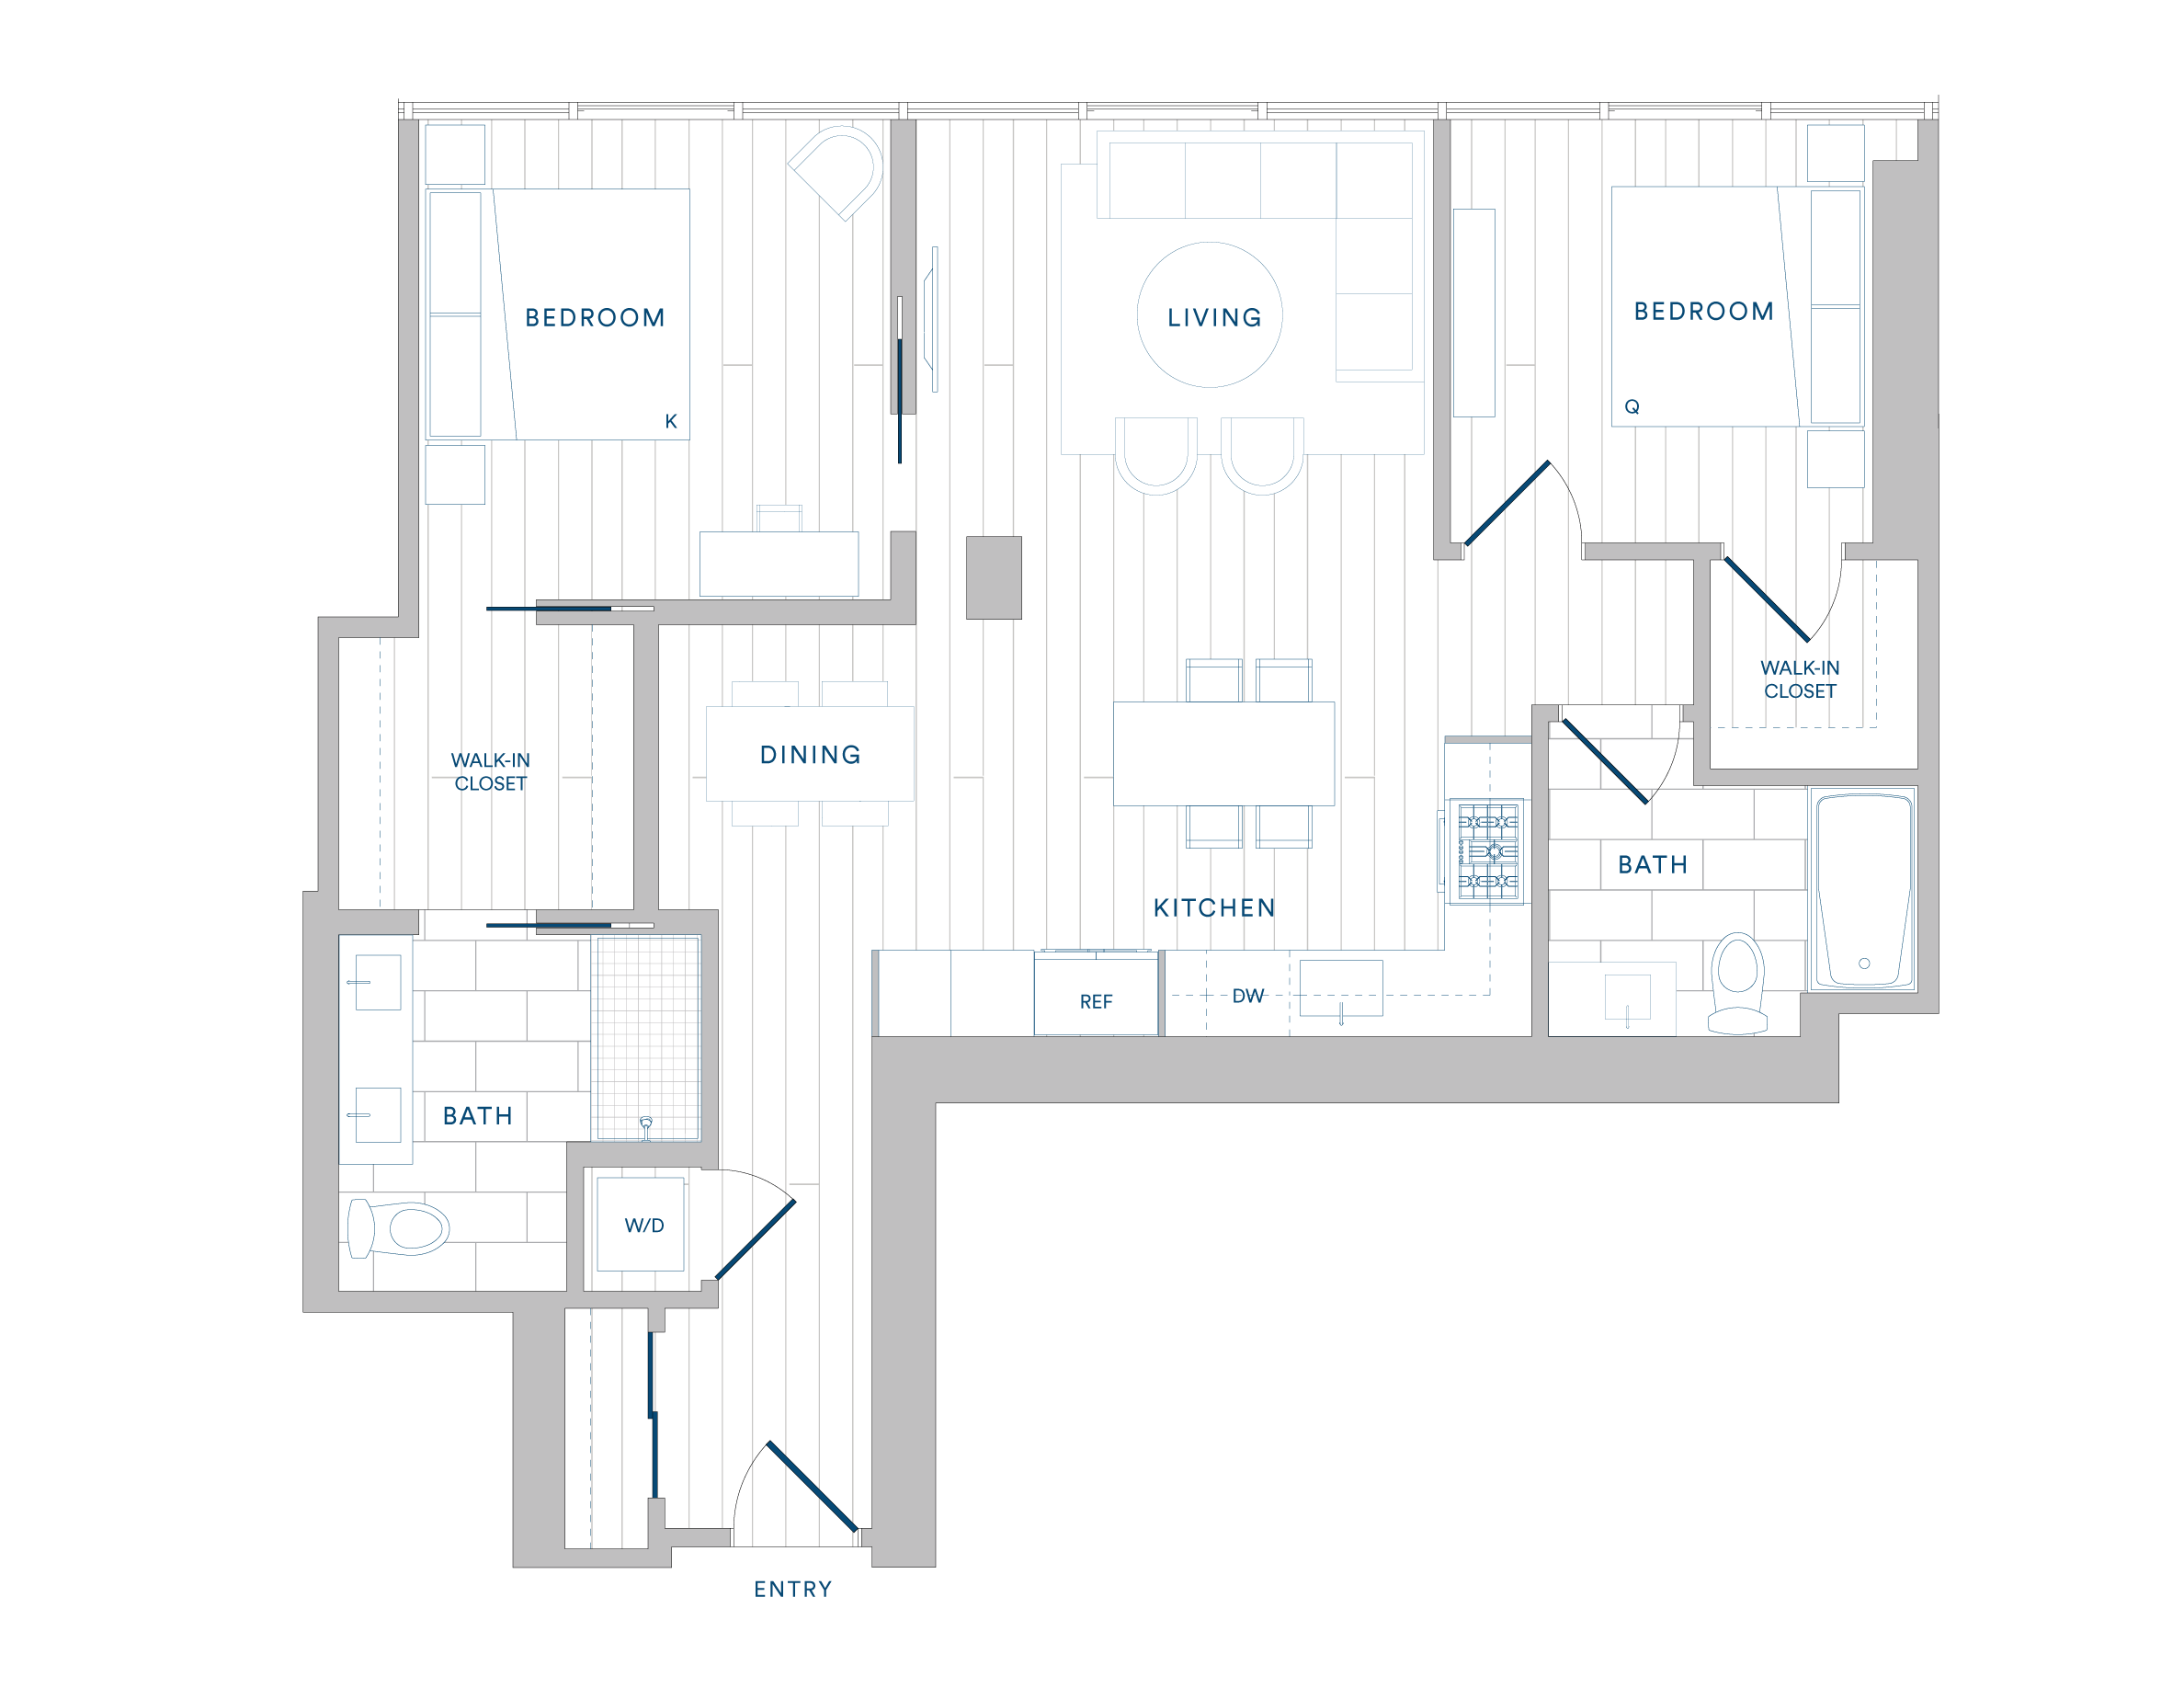 Floorplan for Apartment #1314, 2 bedroom unit at Margarite